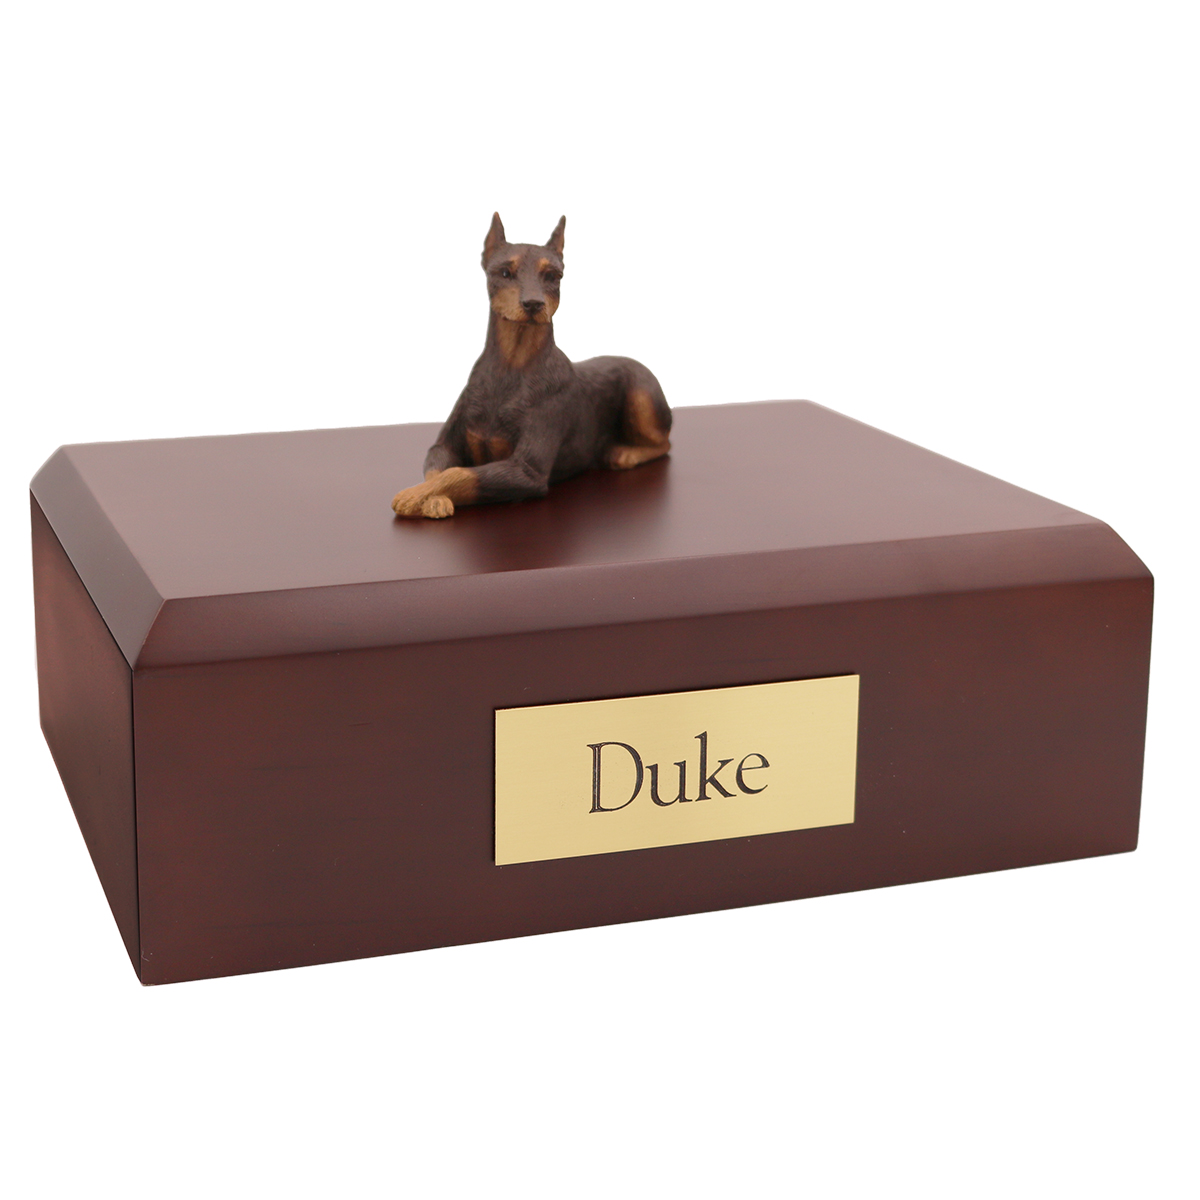 Dog, Doberman, Red - ears up - Figurine Urn